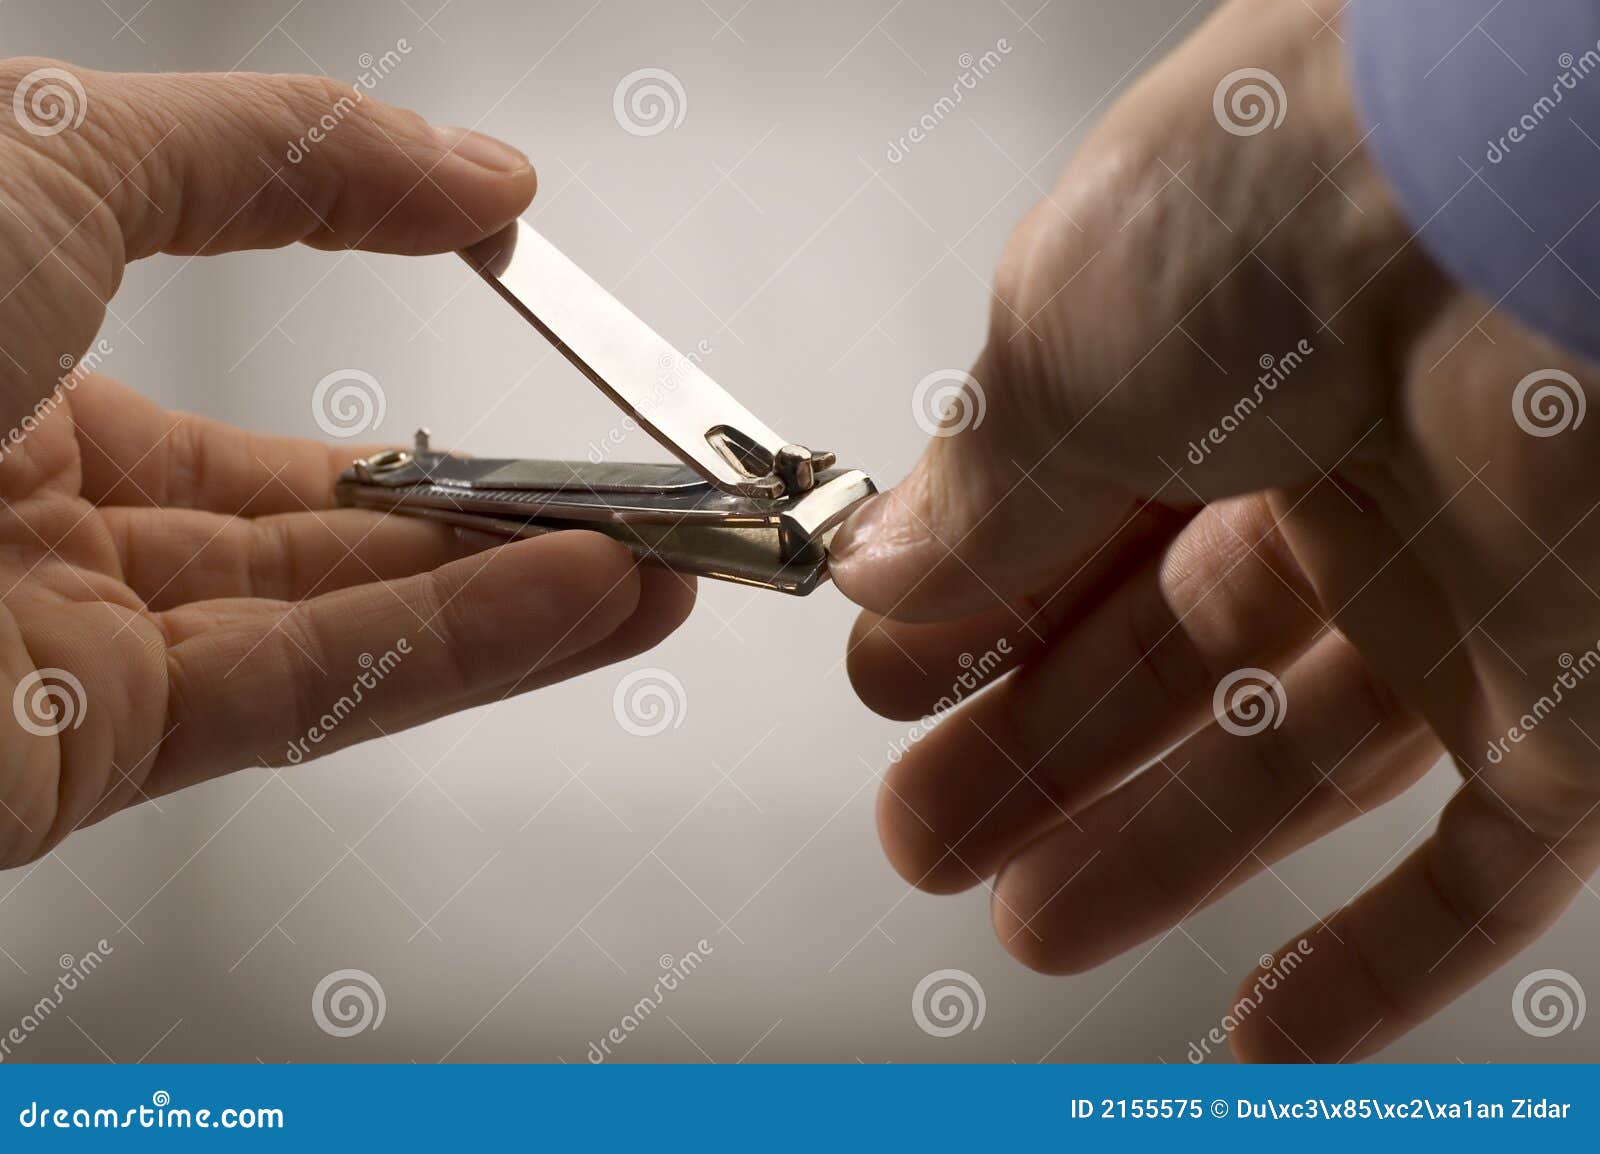 Hygiene - Keep your nails trim - 01 - Nepal | IYCF Image Bank